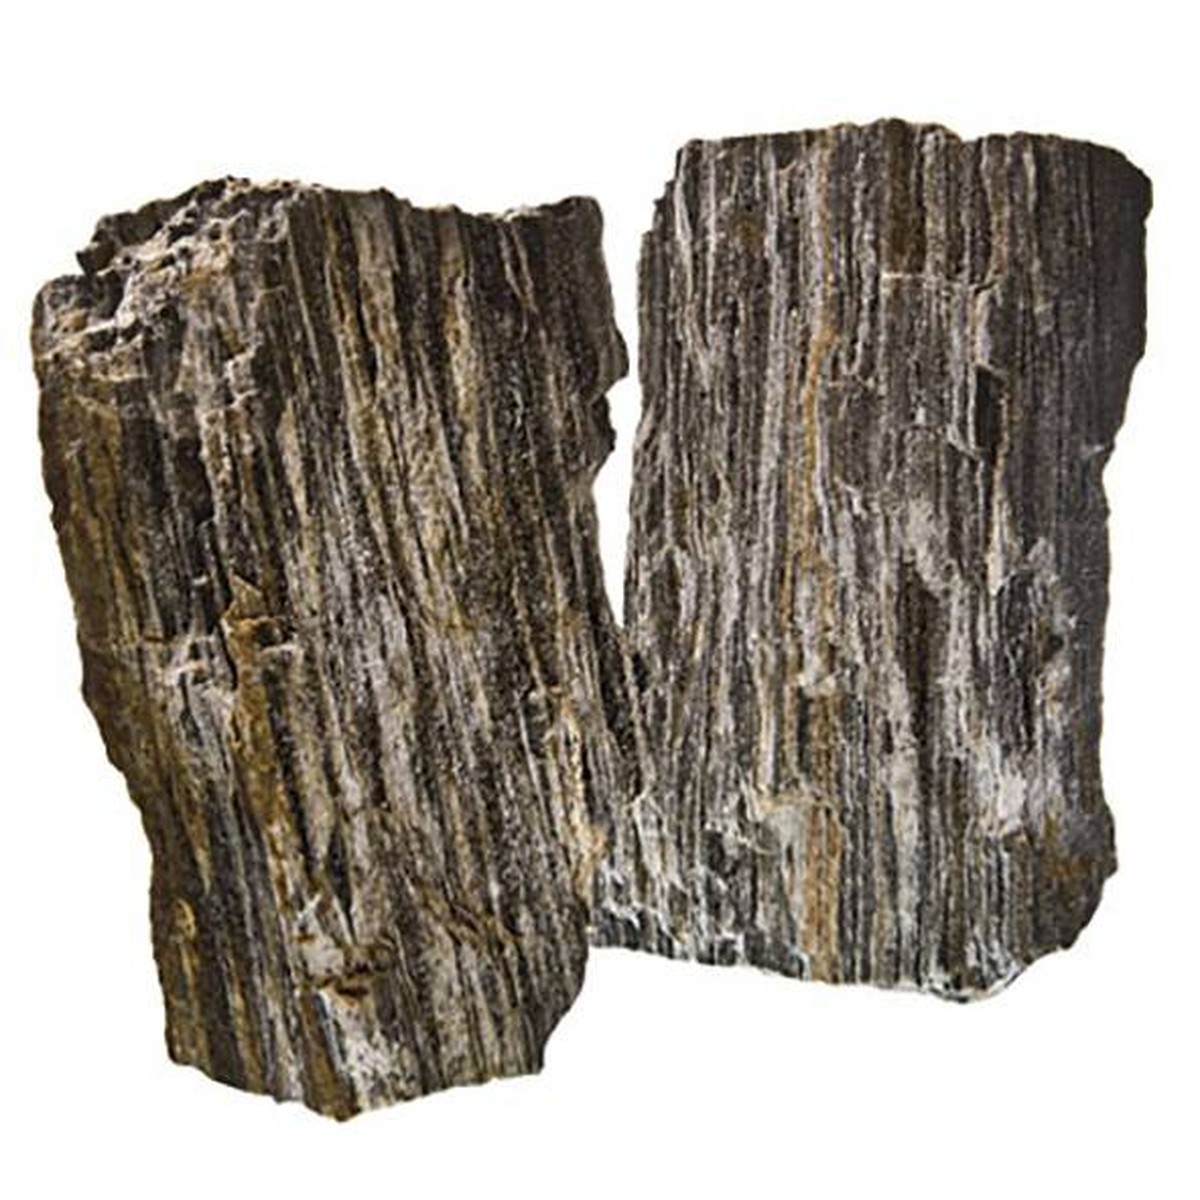   Glimmer Wood Rock  